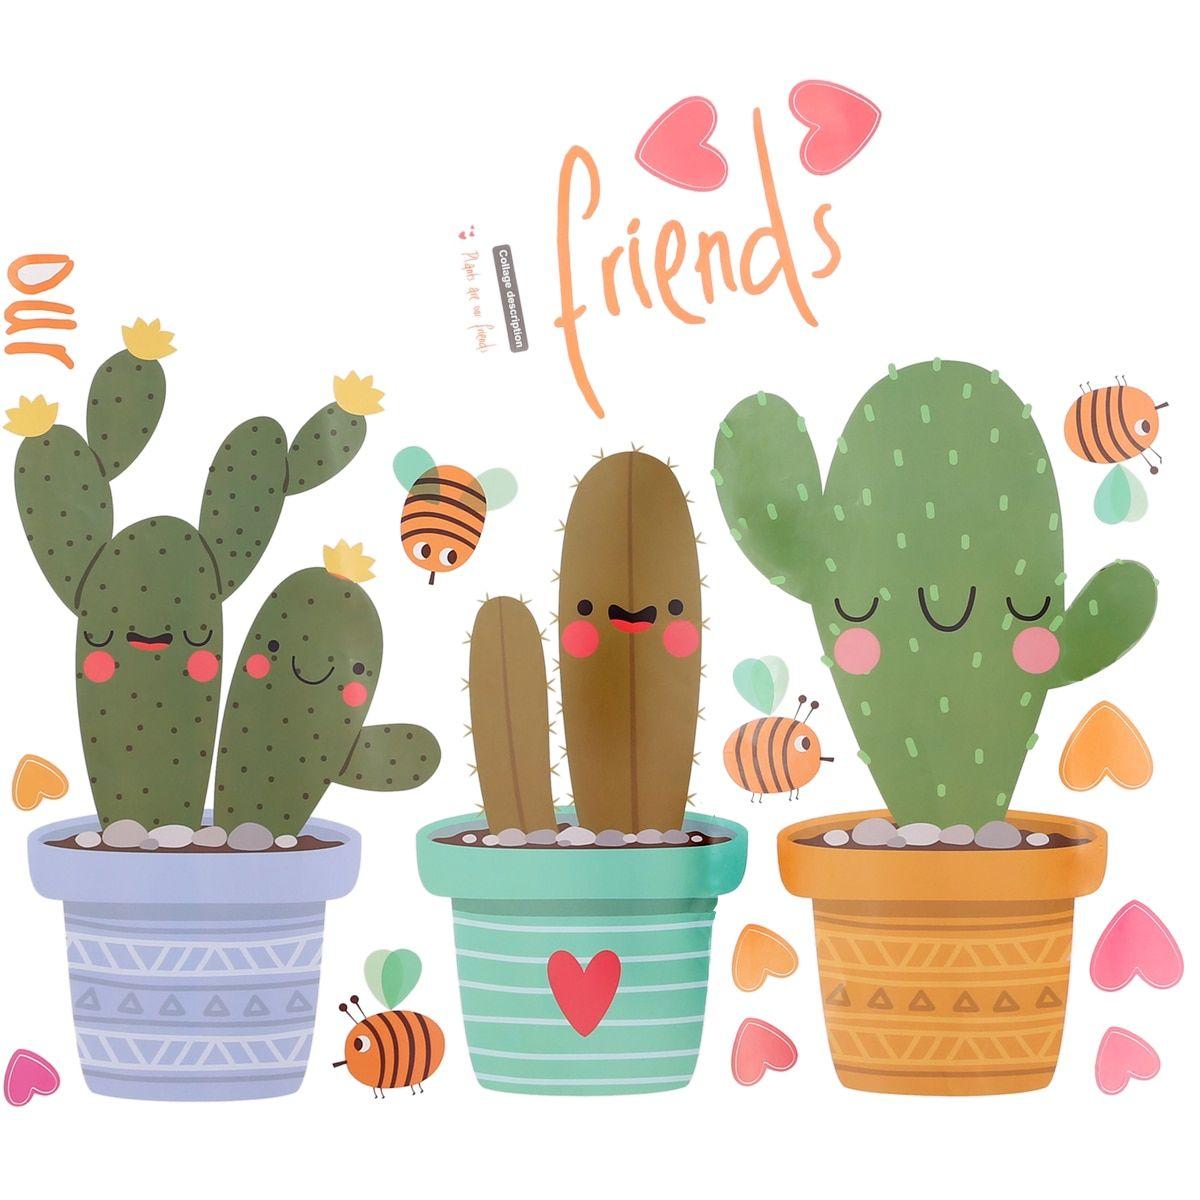 Cute Cactus Wallpapers Wallpapers